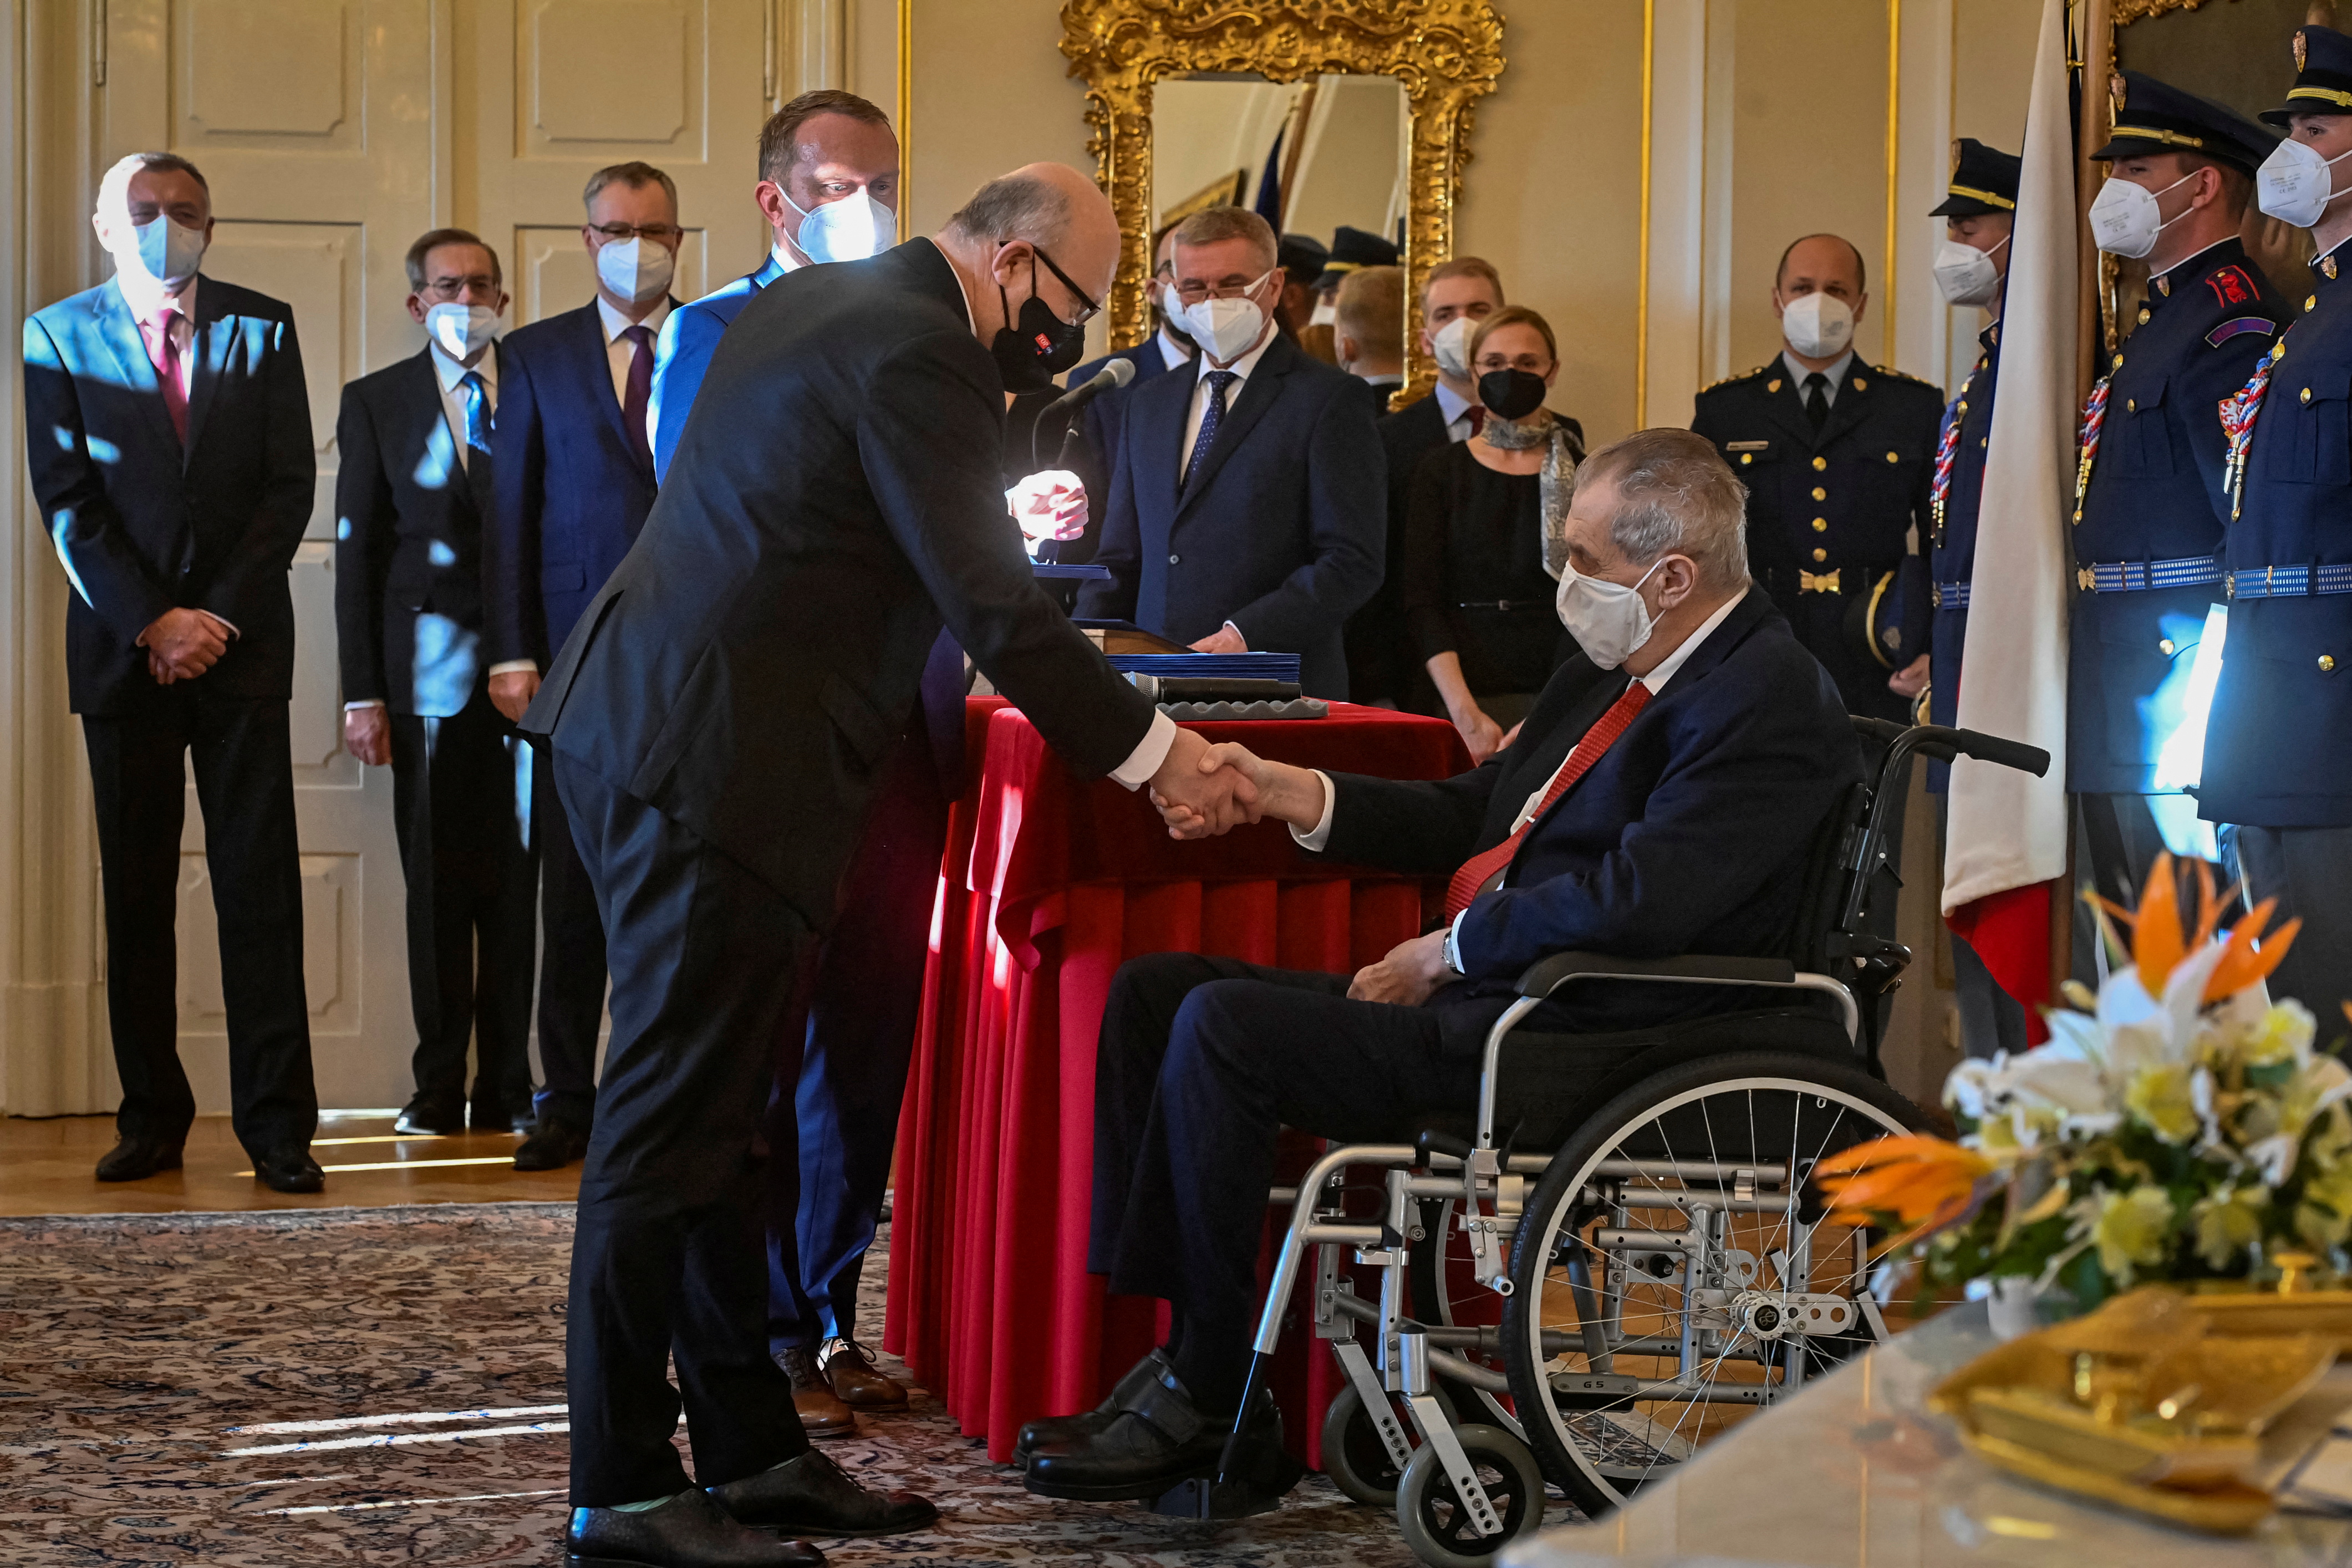 Czech President Milos Zeman appoints new Czech cabinet, at the Lany Chateau